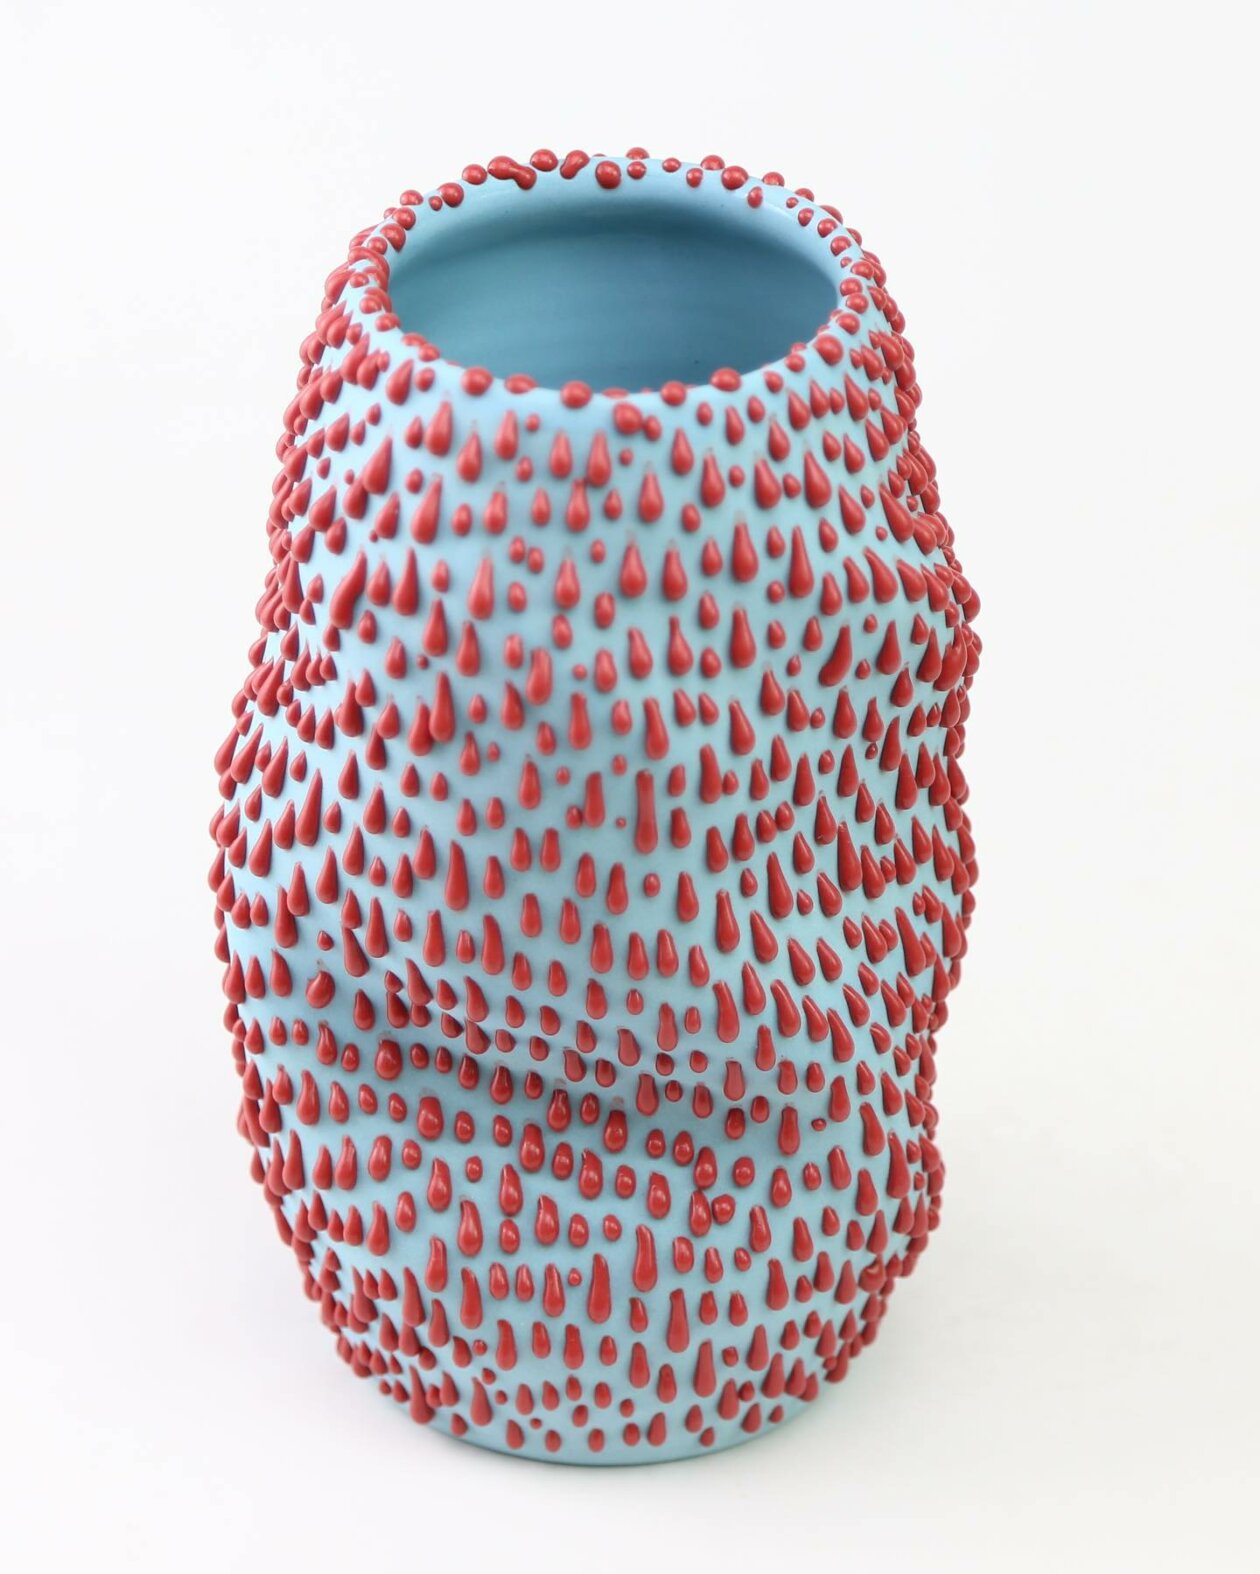 Playful Ceramic Vessels Of Strange Creatures And Melted Shapes By Philip Kupferschmidt 6